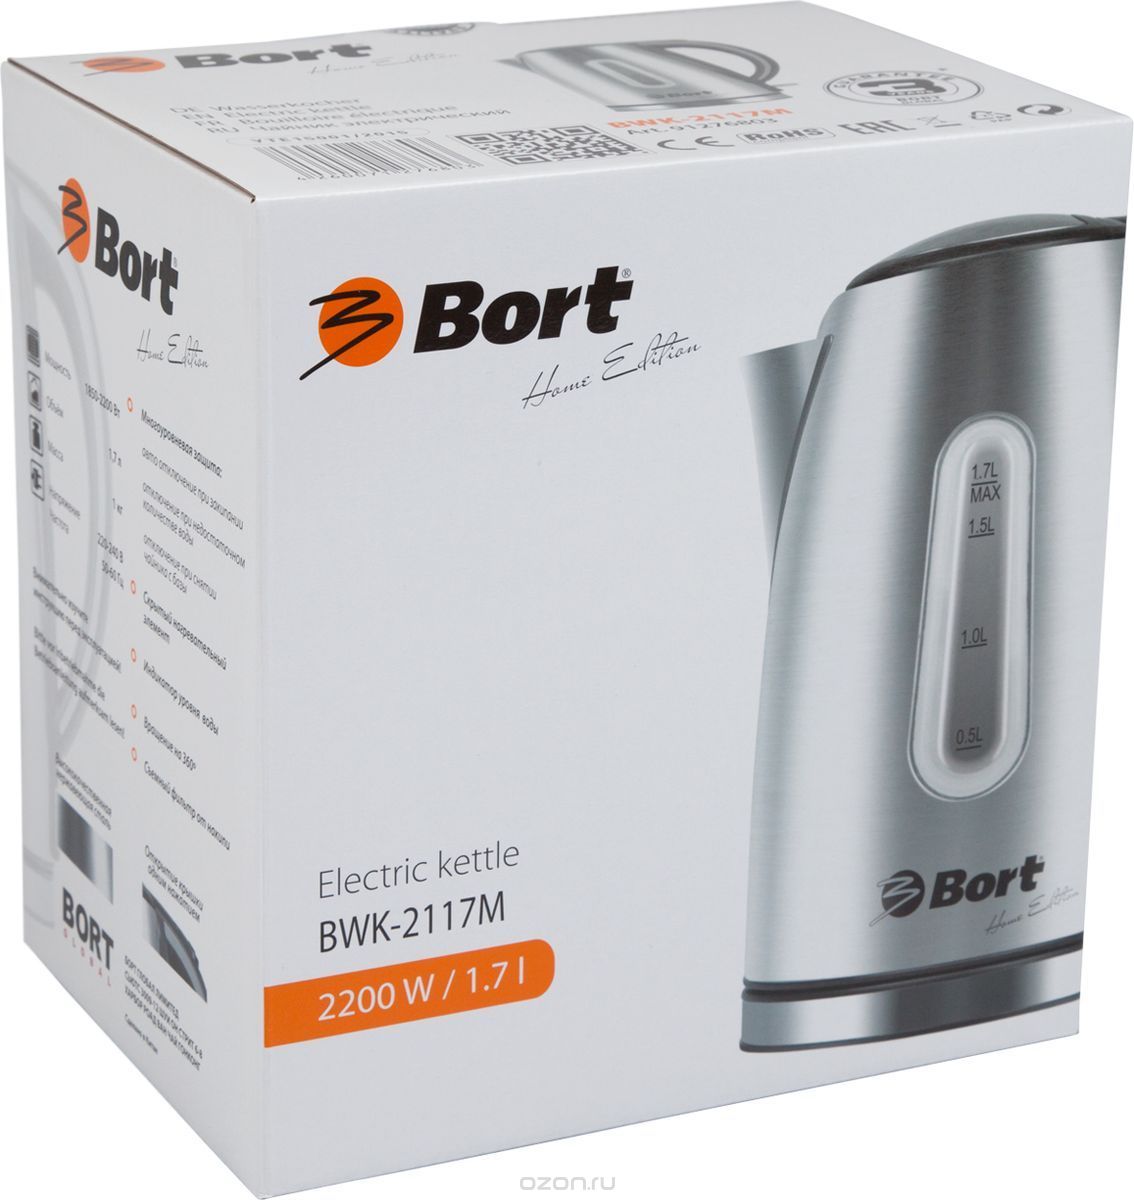   Bort BWK-2117M, Grey Metallic